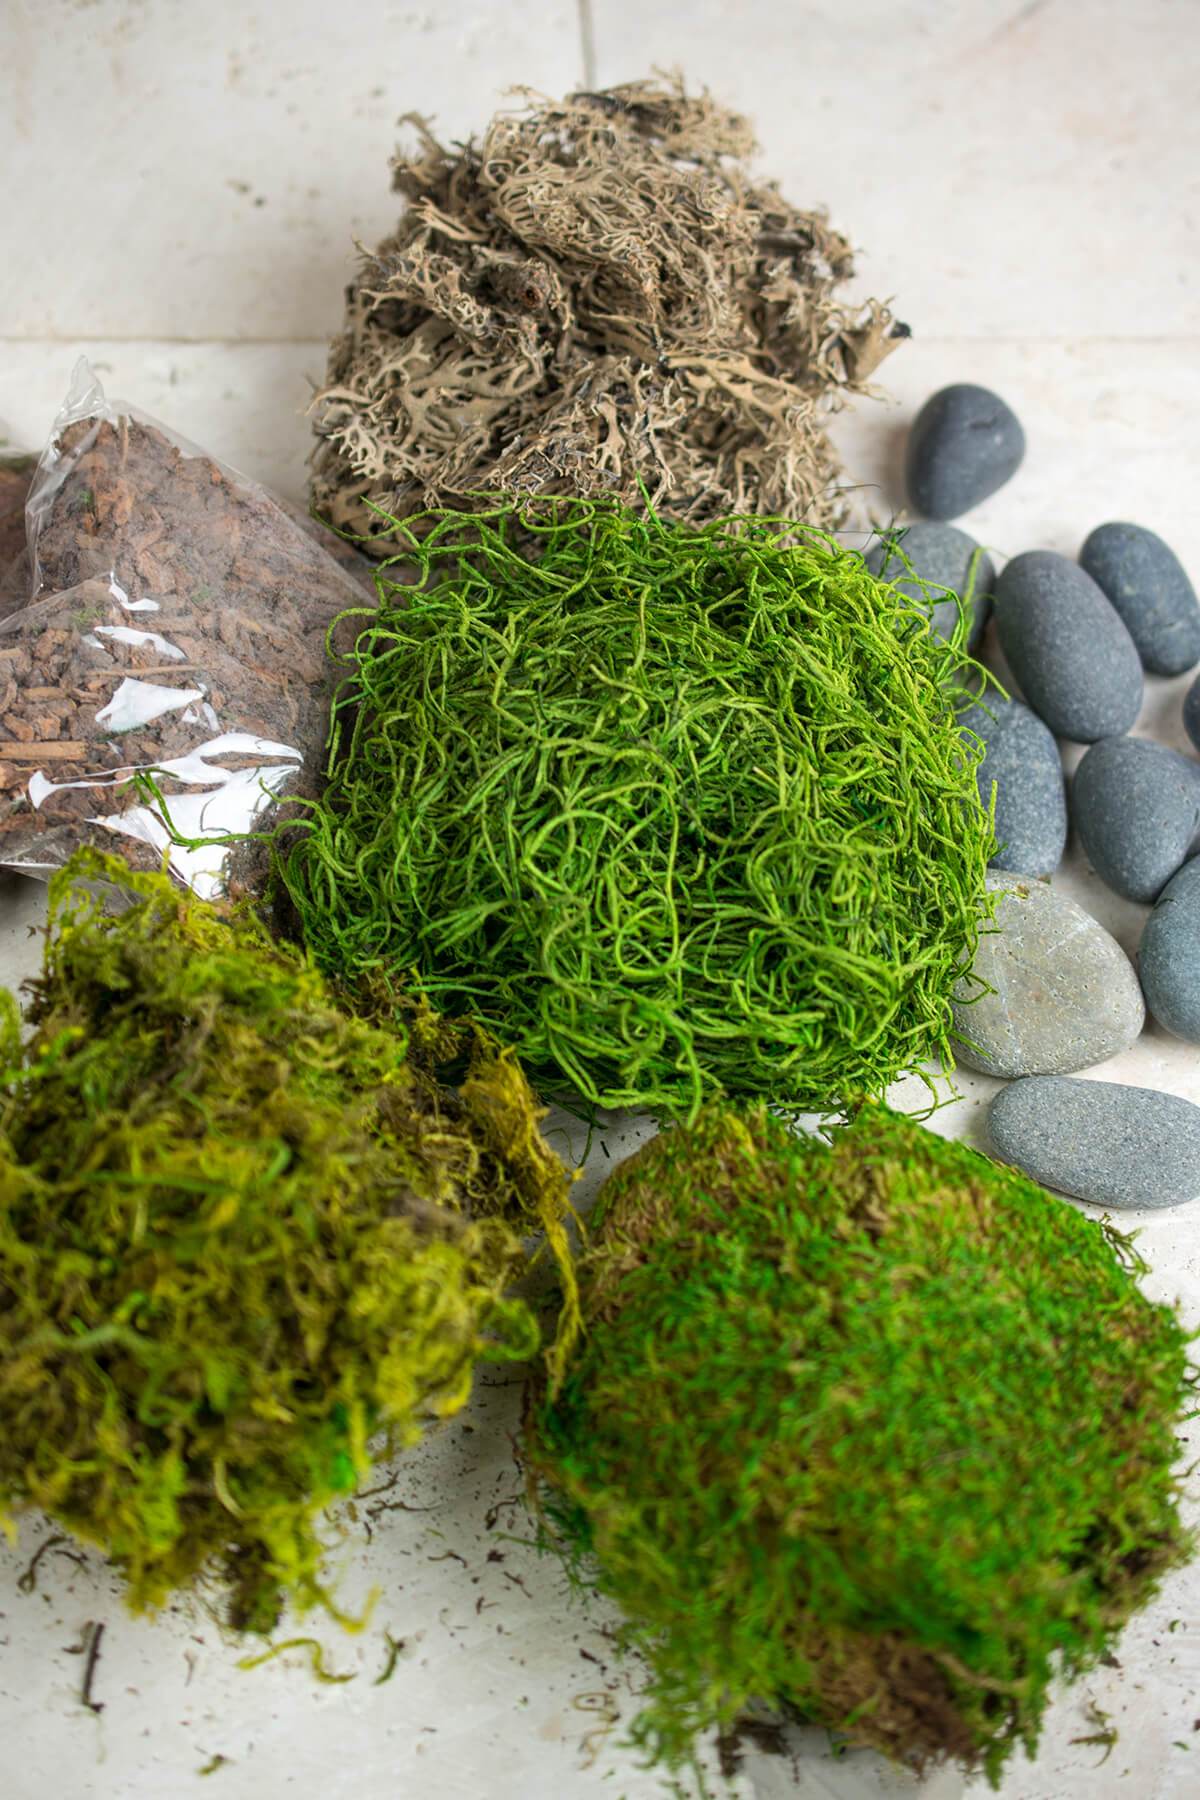 terrarium kit with bark asst mosses stones and lichen